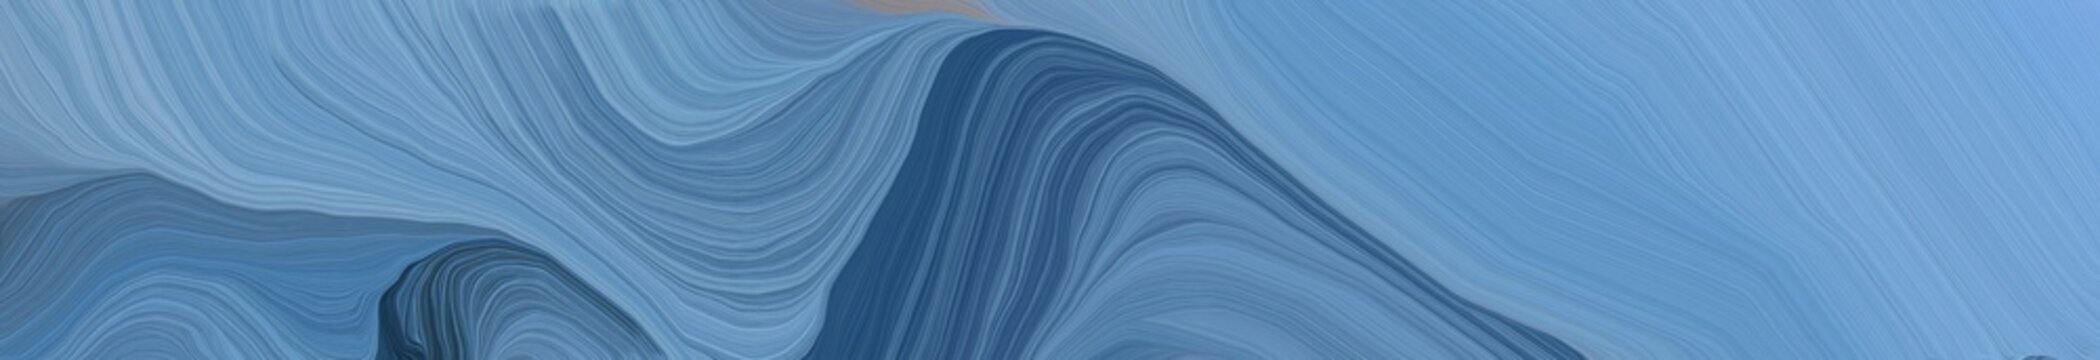 landscape orientation graphic with waves. modern curvy waves background illustration with cadet blue, dark slate gray and teal blue color © Eigens